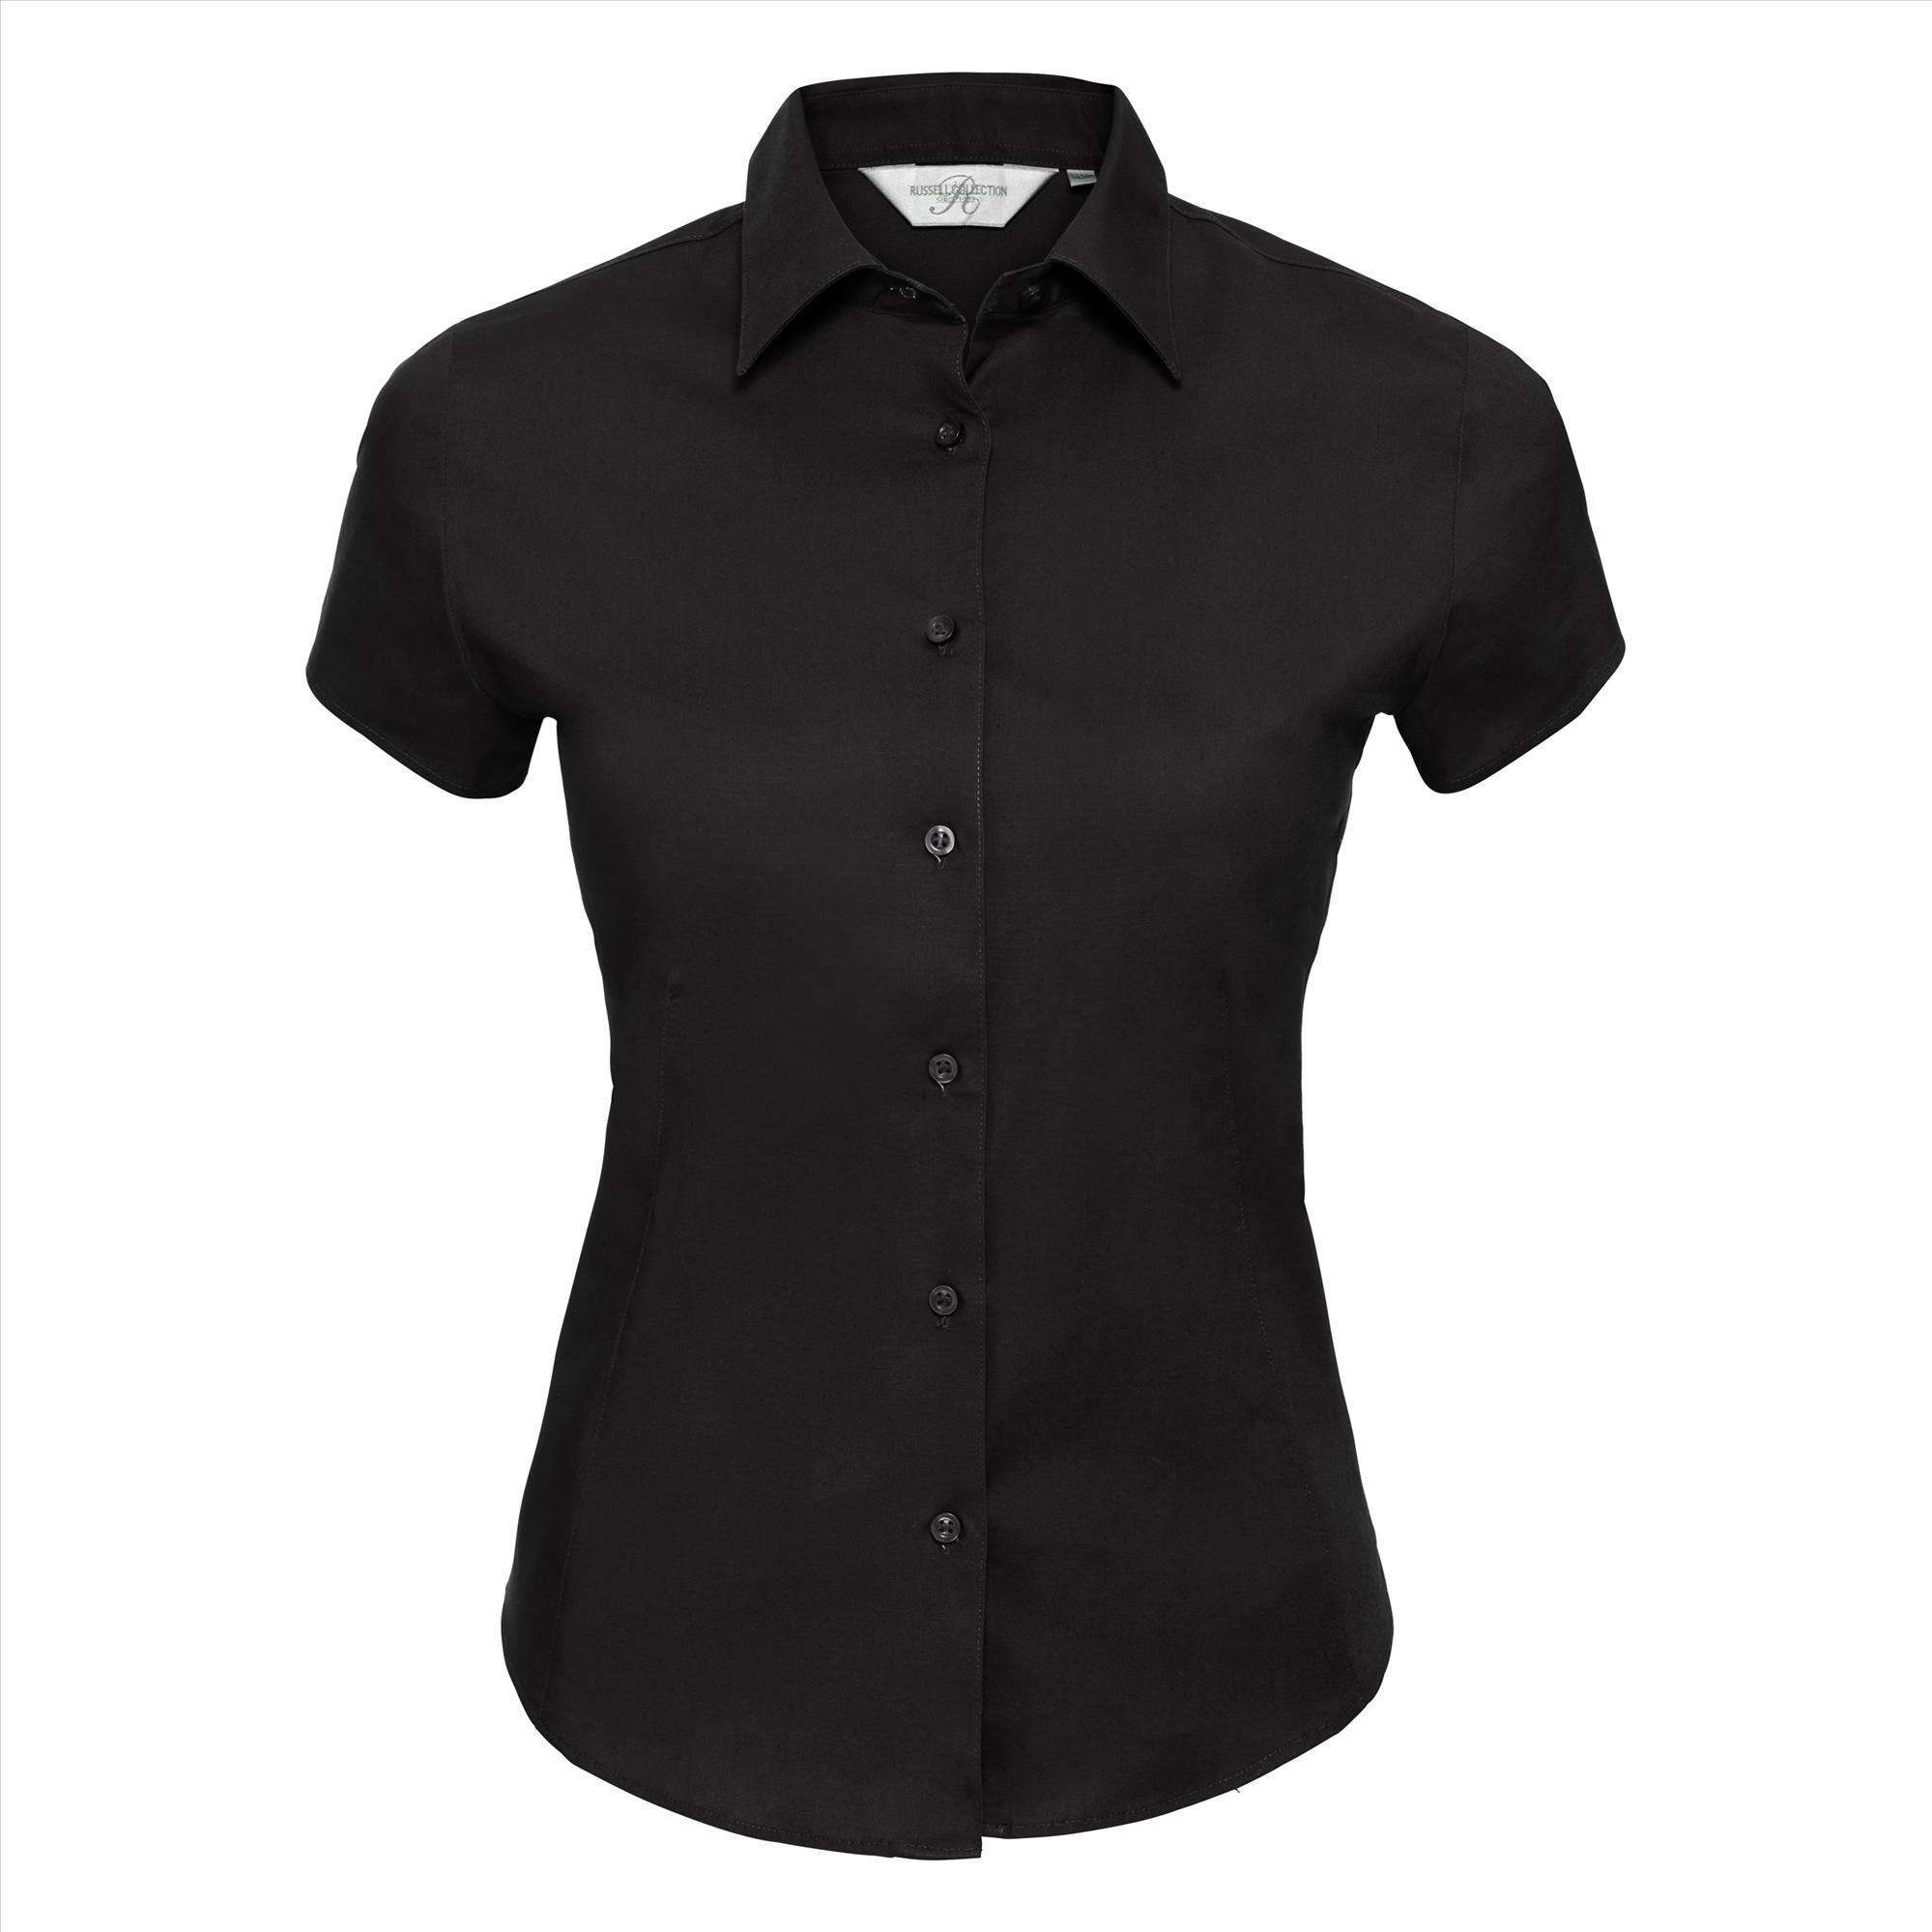 Hippe dames blouse zwart te personaliseren